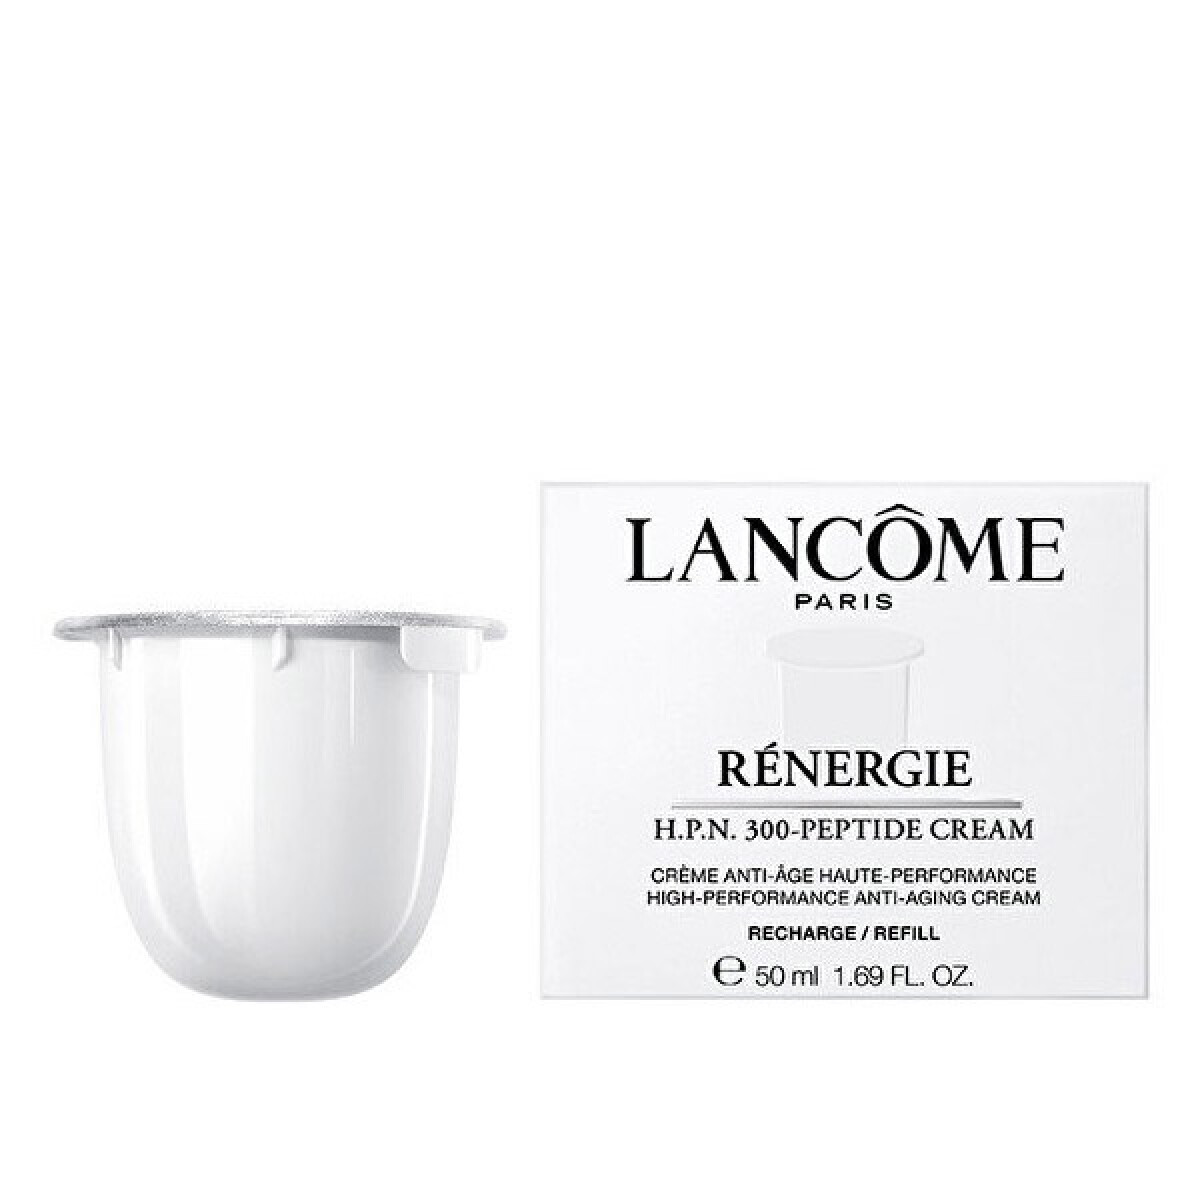 Lancome Renergie New Cream J50ml Refill R23 